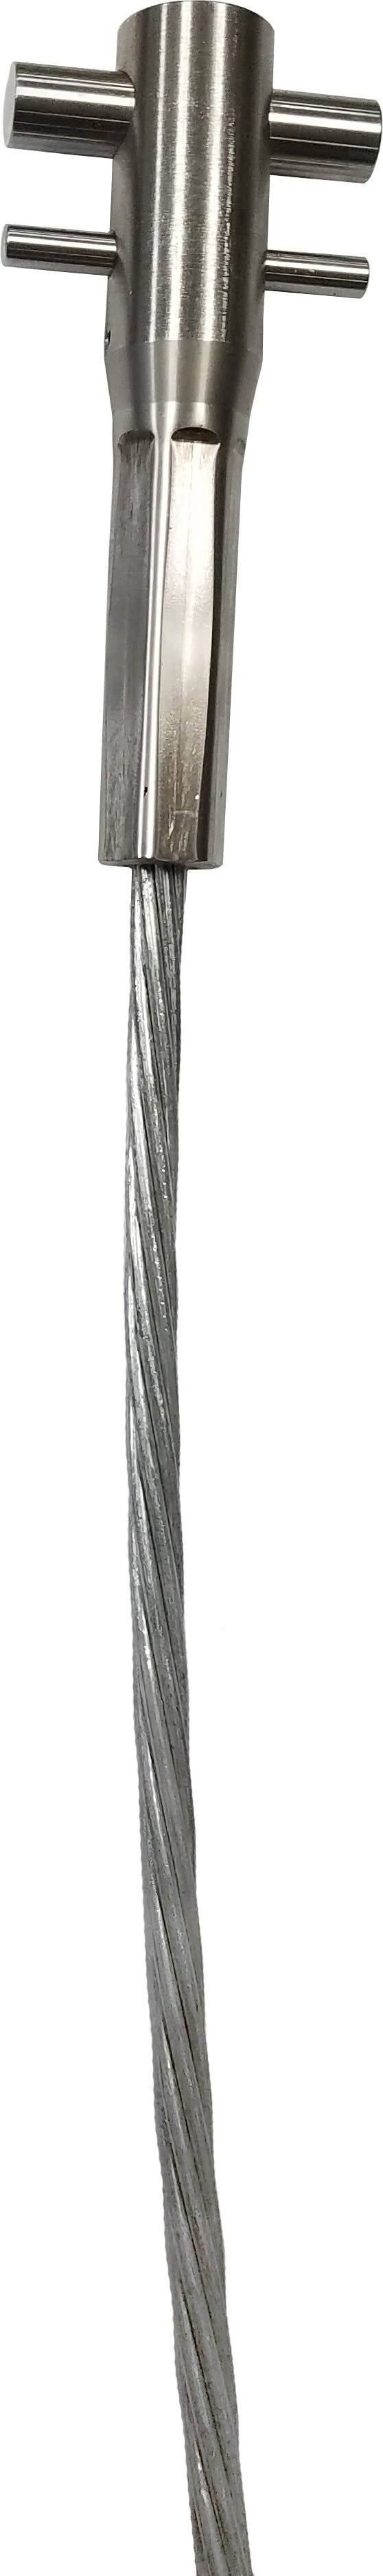 3M™ DBI-SALA® Lad-Saf™ Swaged Cable 6115010, 3/8 Inch, Galvanized Steel, 60 m_0